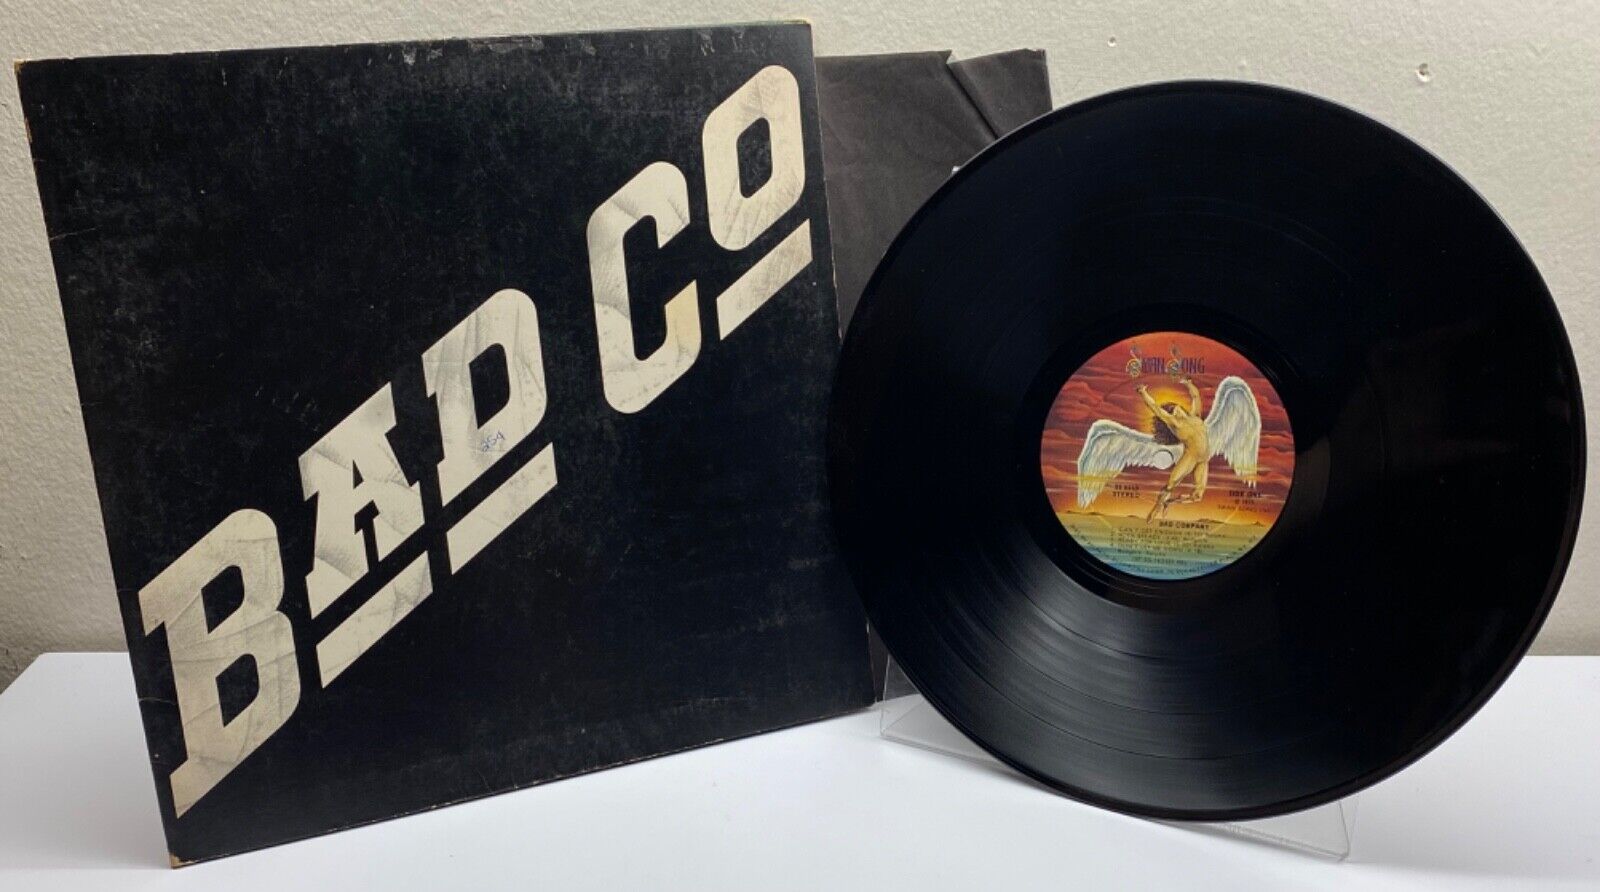 1974 Bad Company Swan Song SS8410 12” Vinyl PR Presswell Pressing Gatefold READ